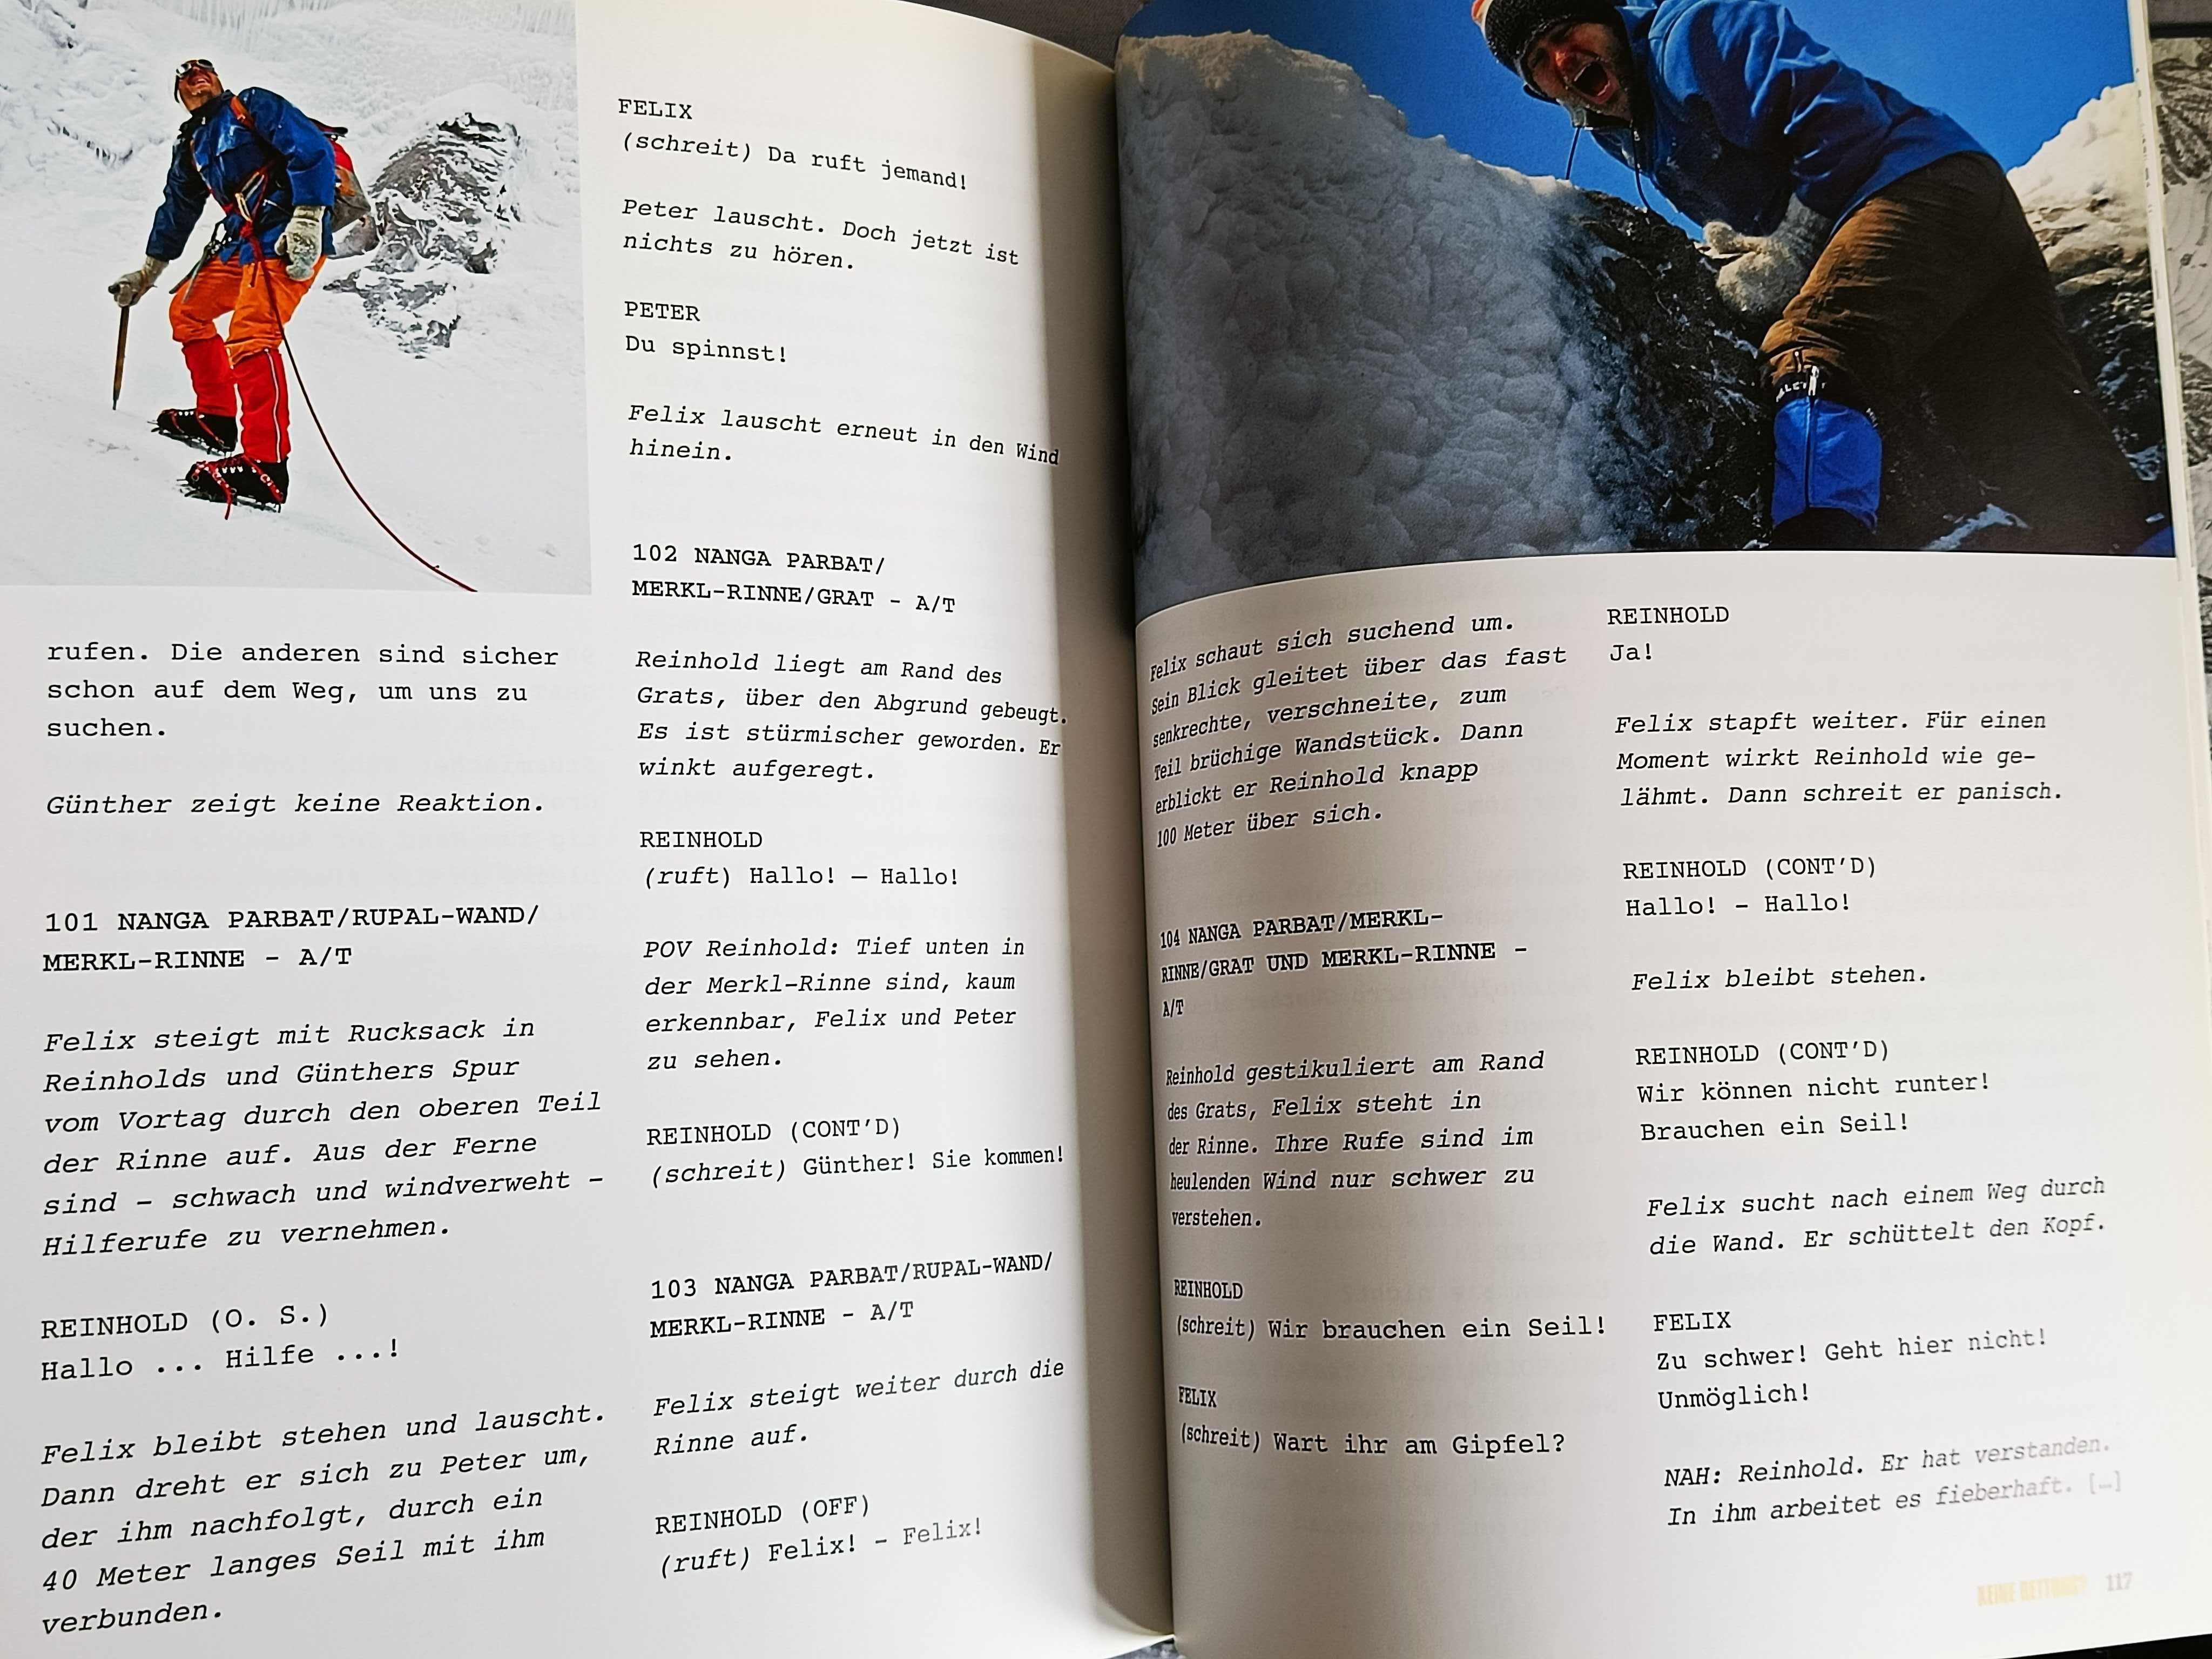 Martin, Die Messner-Bruder am Nanga Parbat - książka po niemiecku